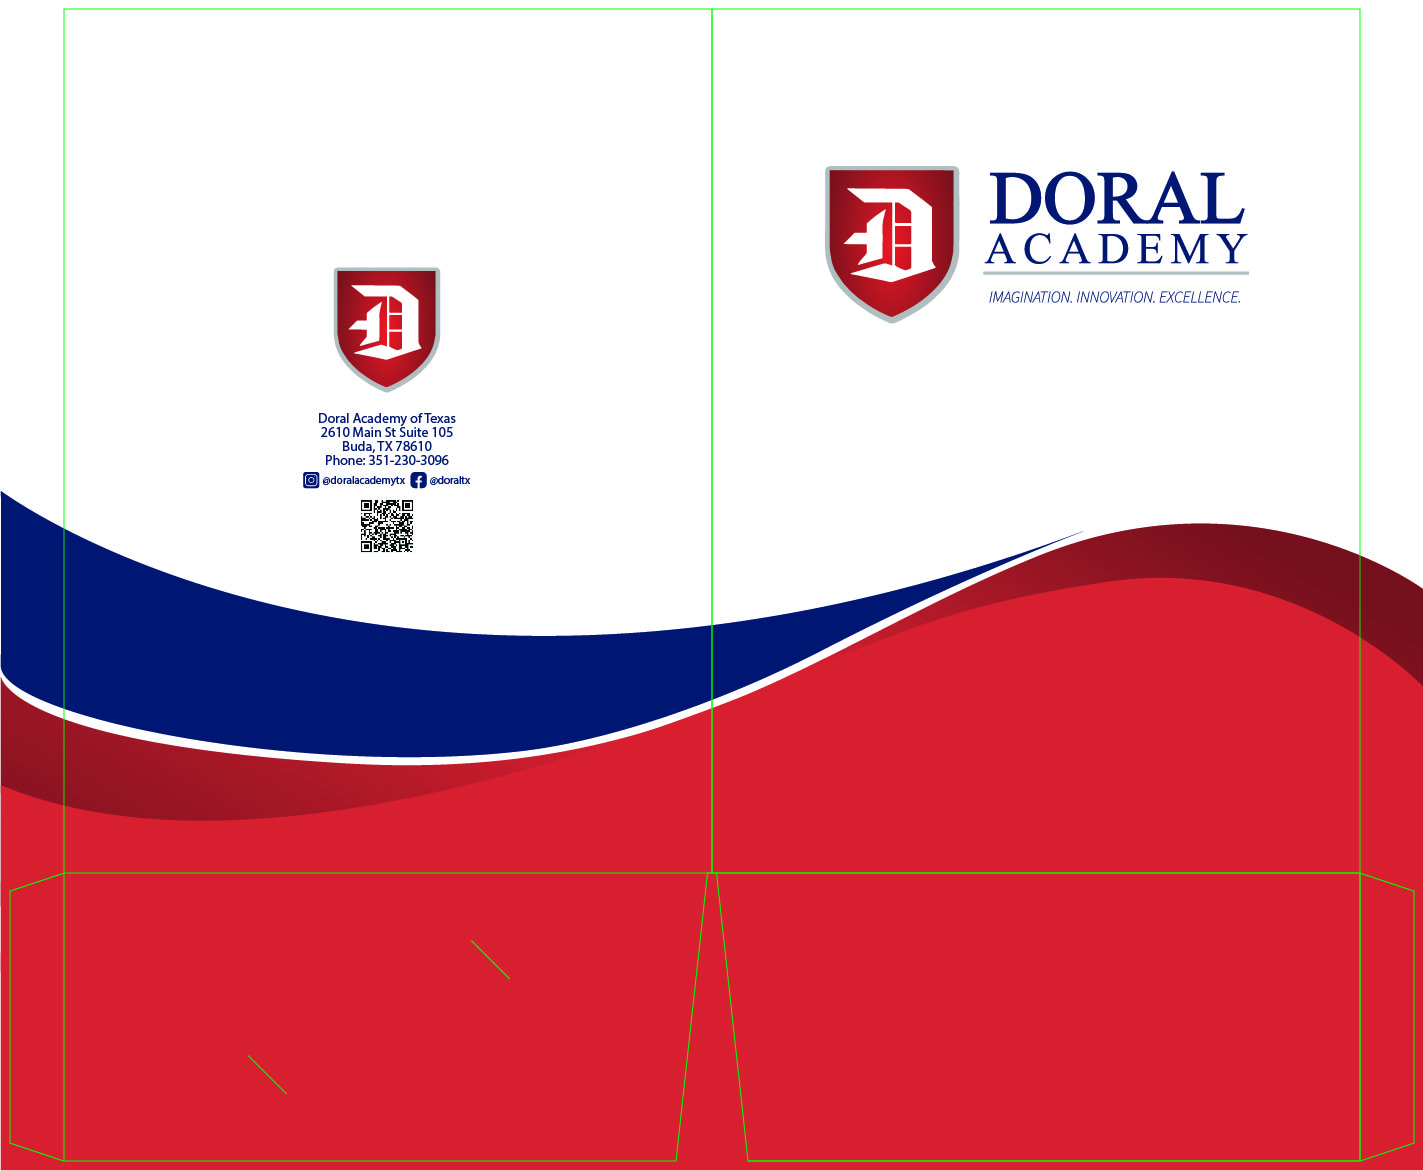 First proposed design option for Doral Academy's presentation folders